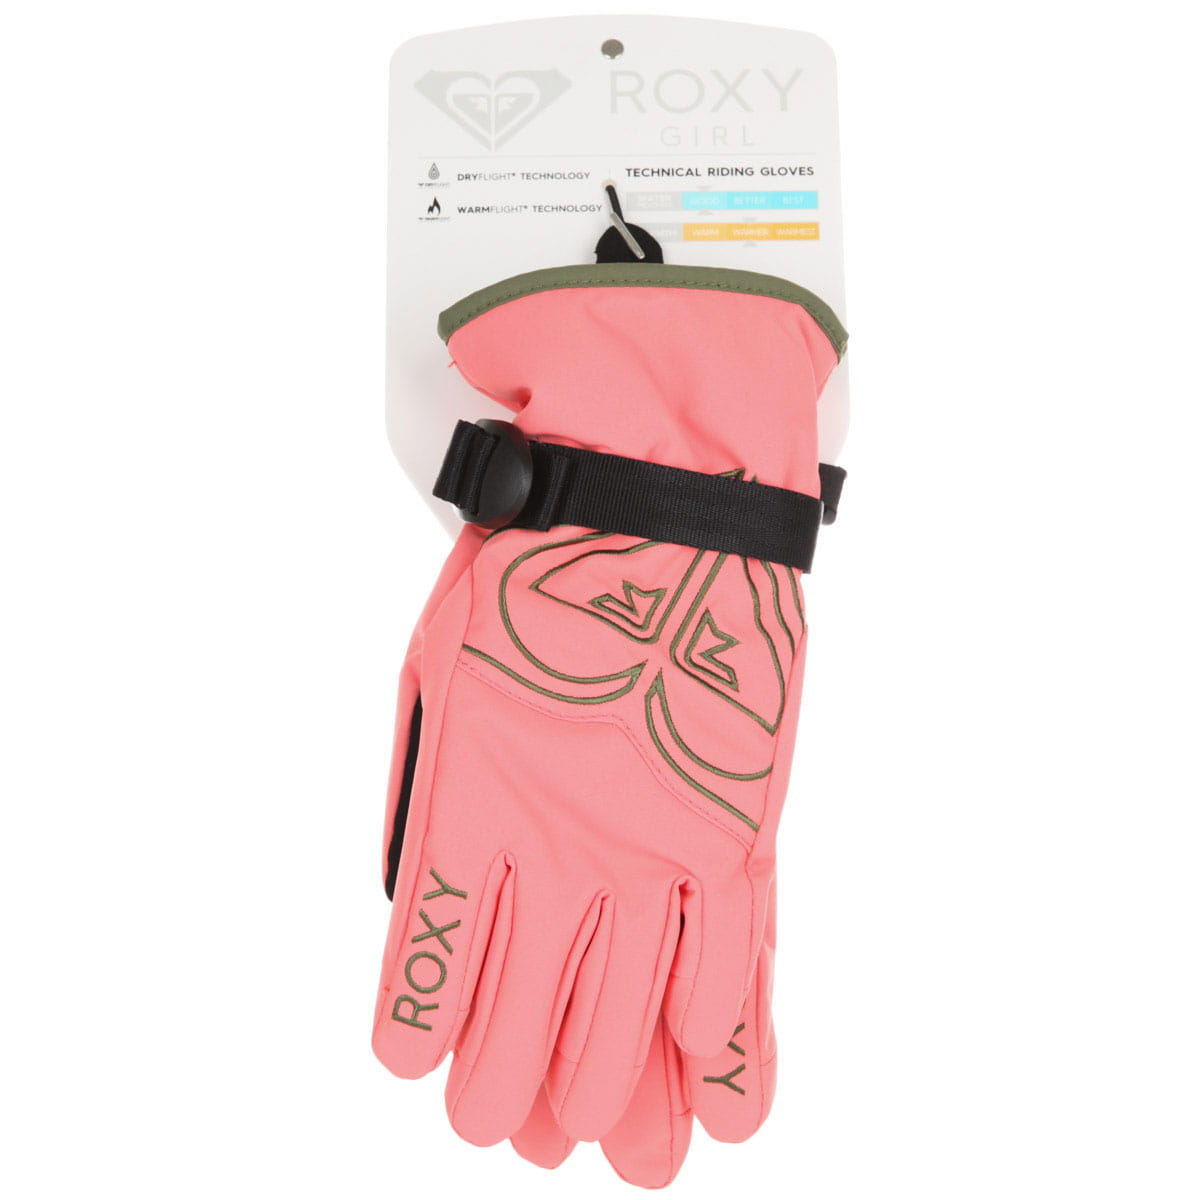 Сноубордические перчатки Roxy Cynthia Rowley. Сноубордические перчатки женские Roxy салатовые. Рокси перчатки женские 2022. DG сноубордические перчатки.